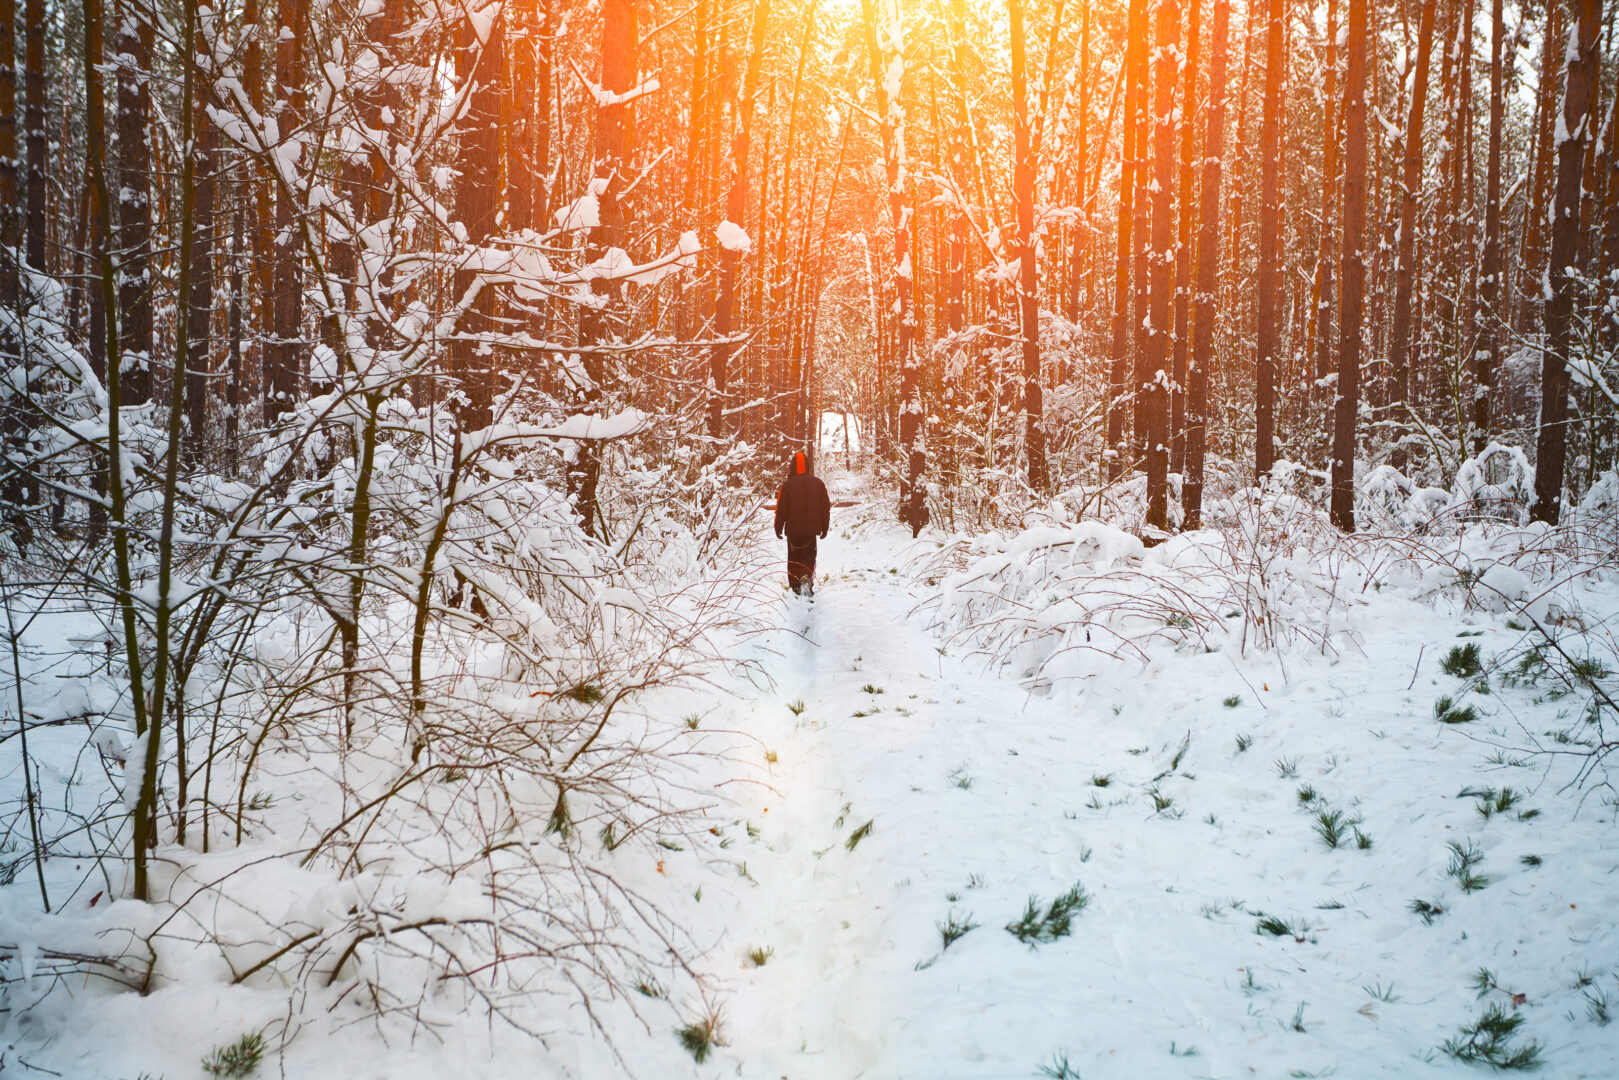 A man walking in a snowy forest.